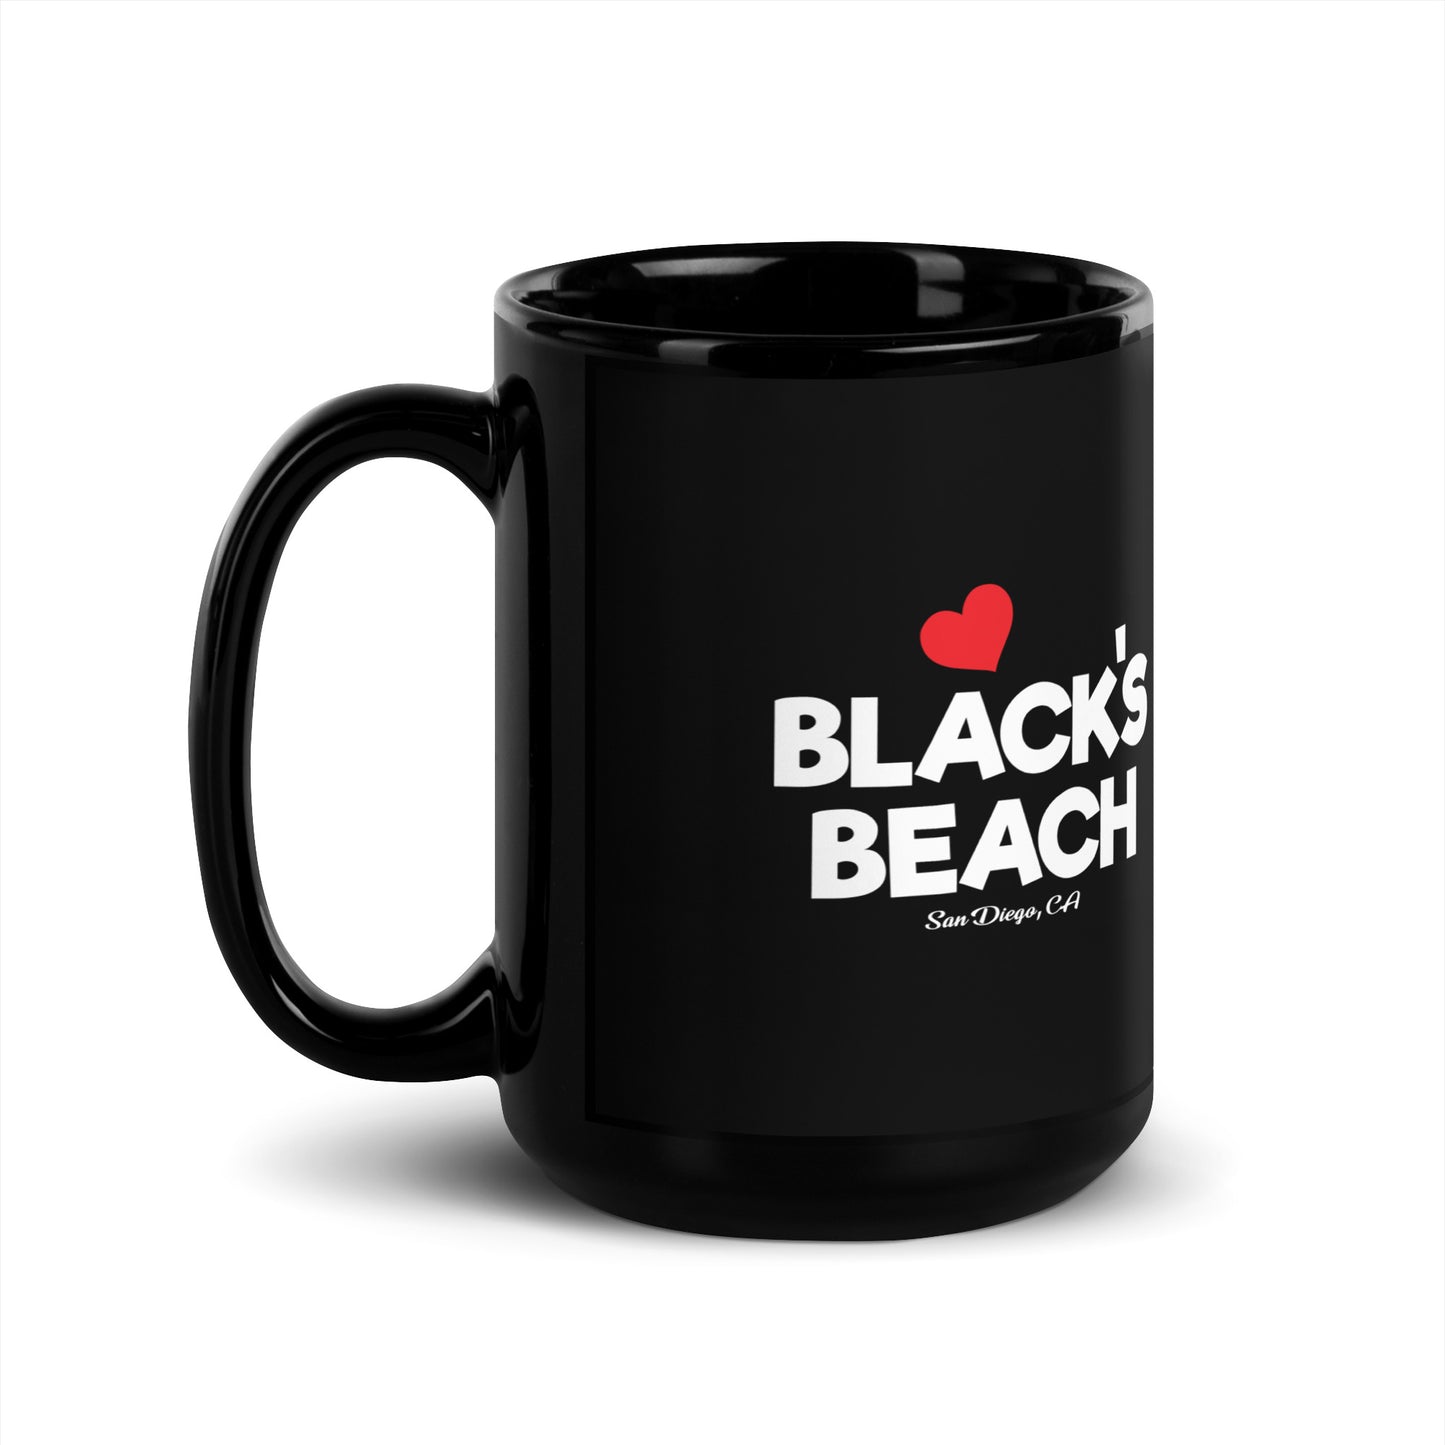 Black's Beach Tees / Style 01 / Black Glossy Mug